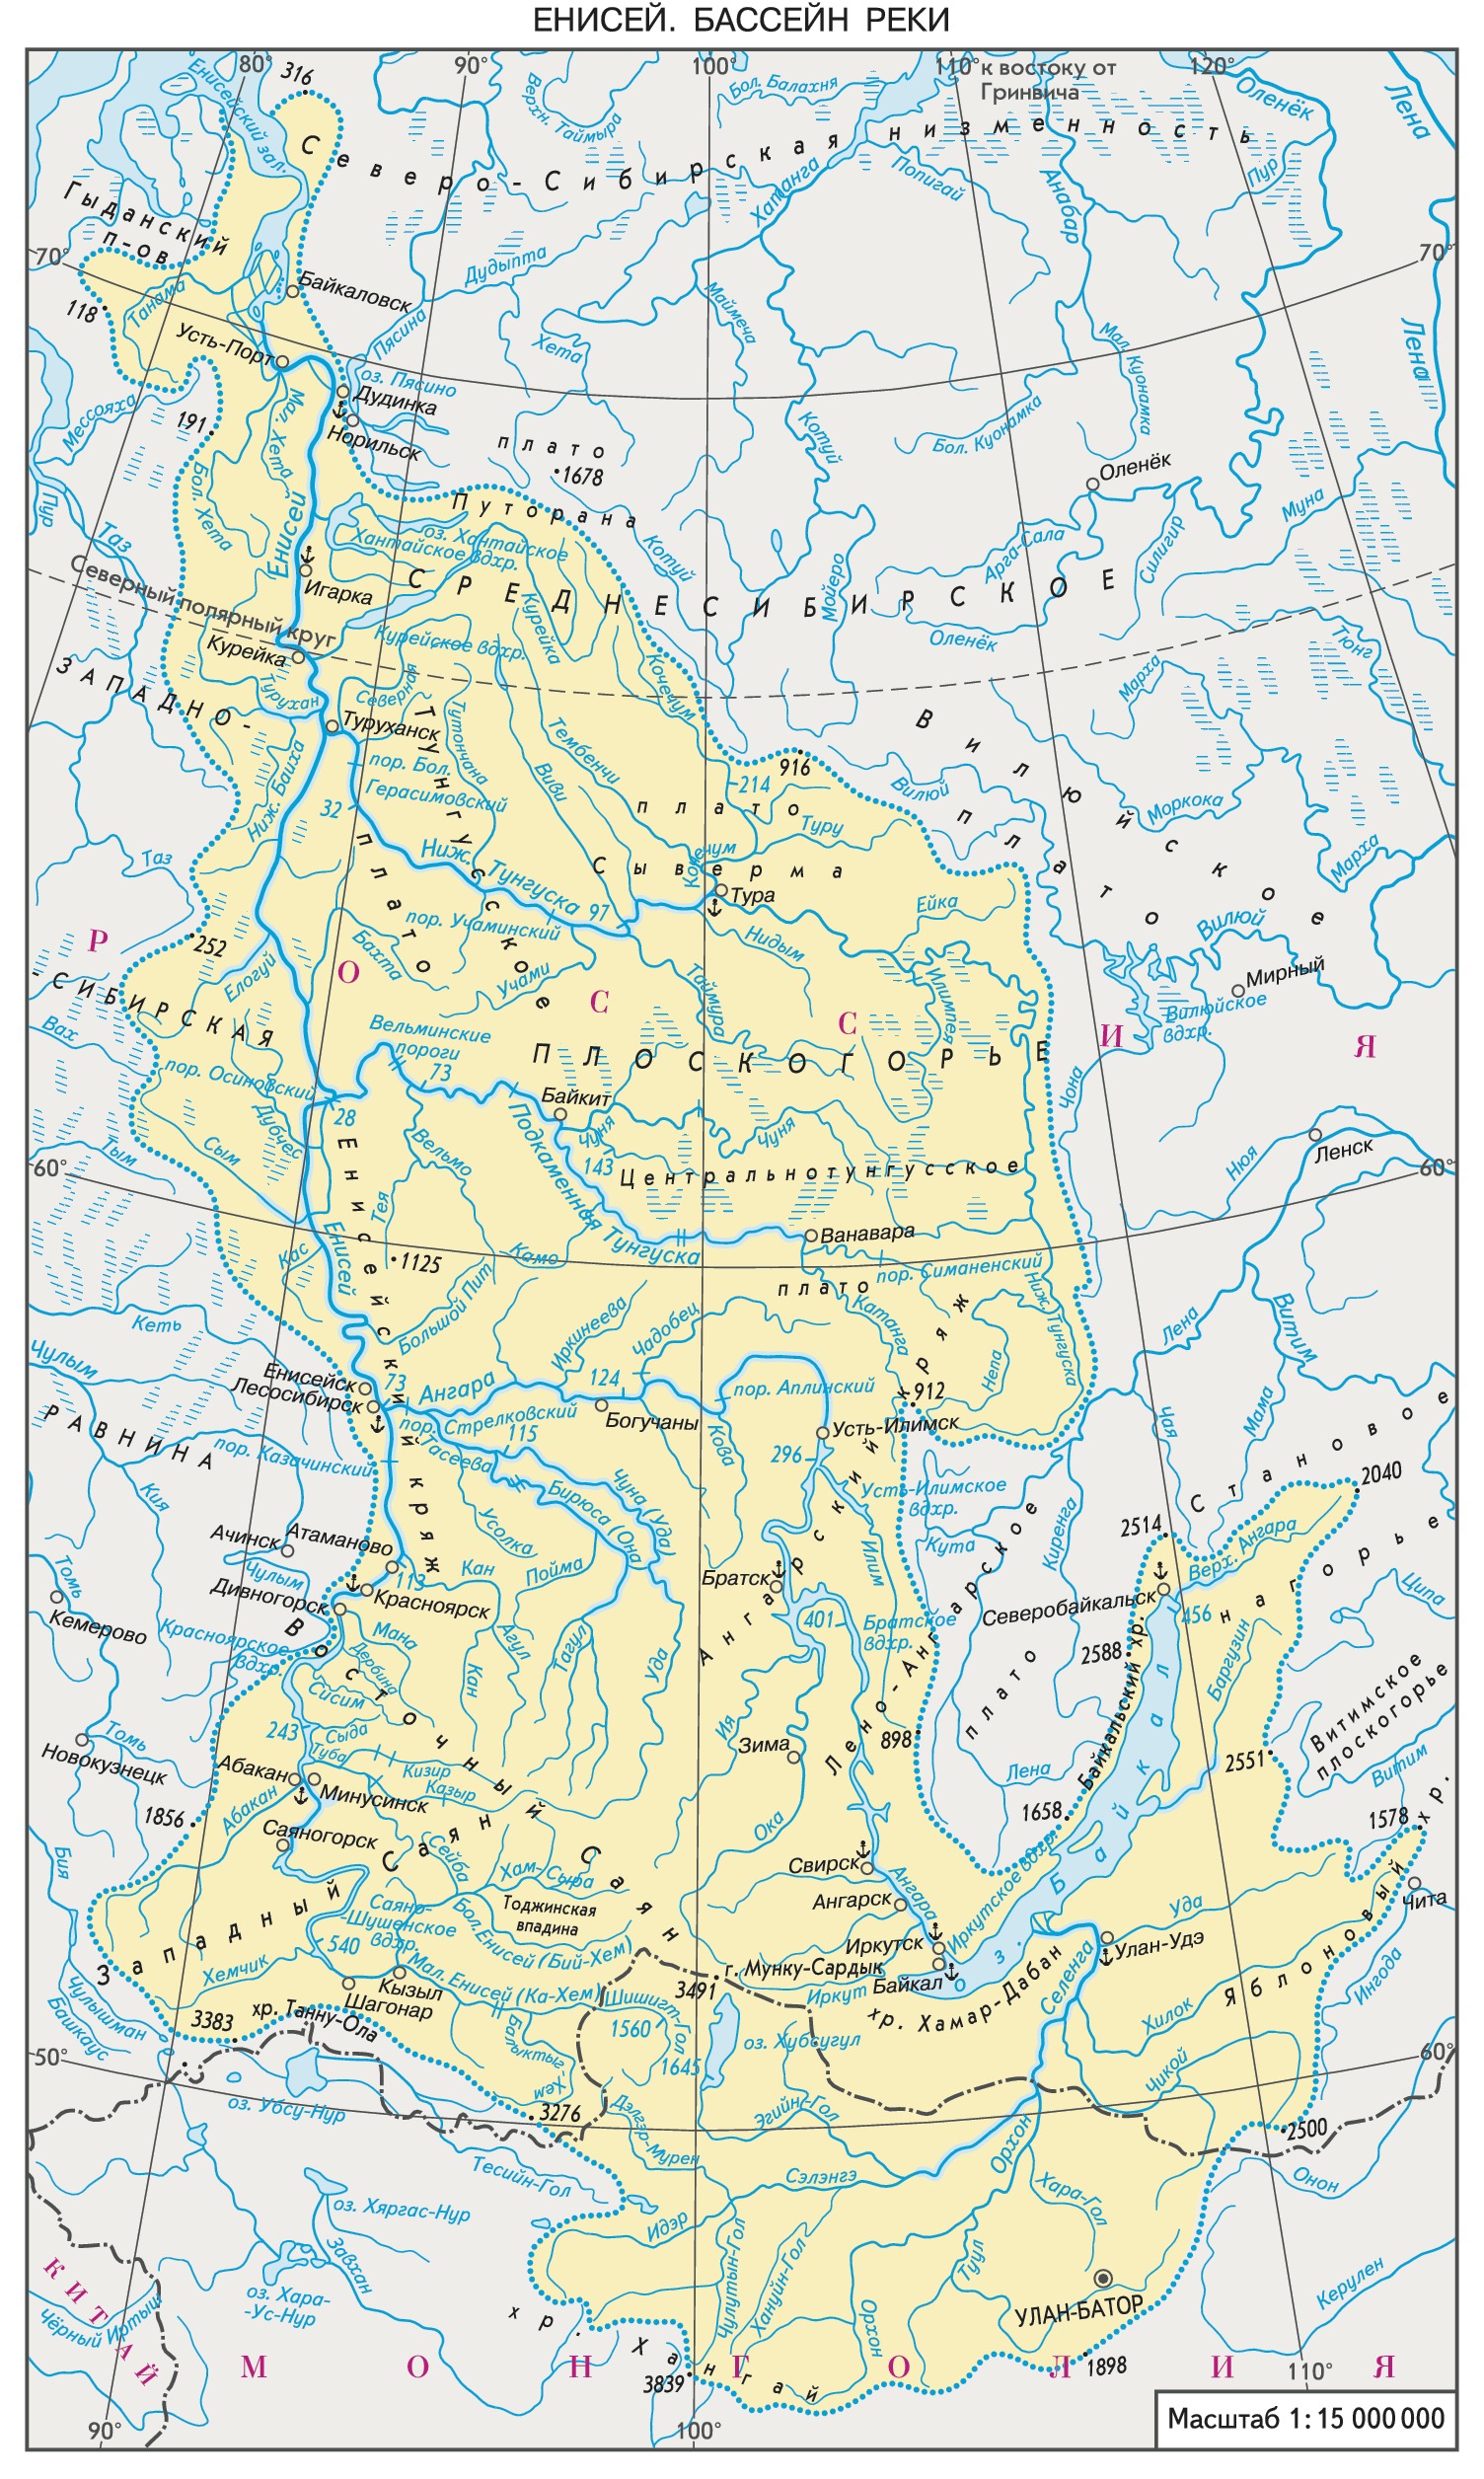 Бассейн реки Енисей на карте